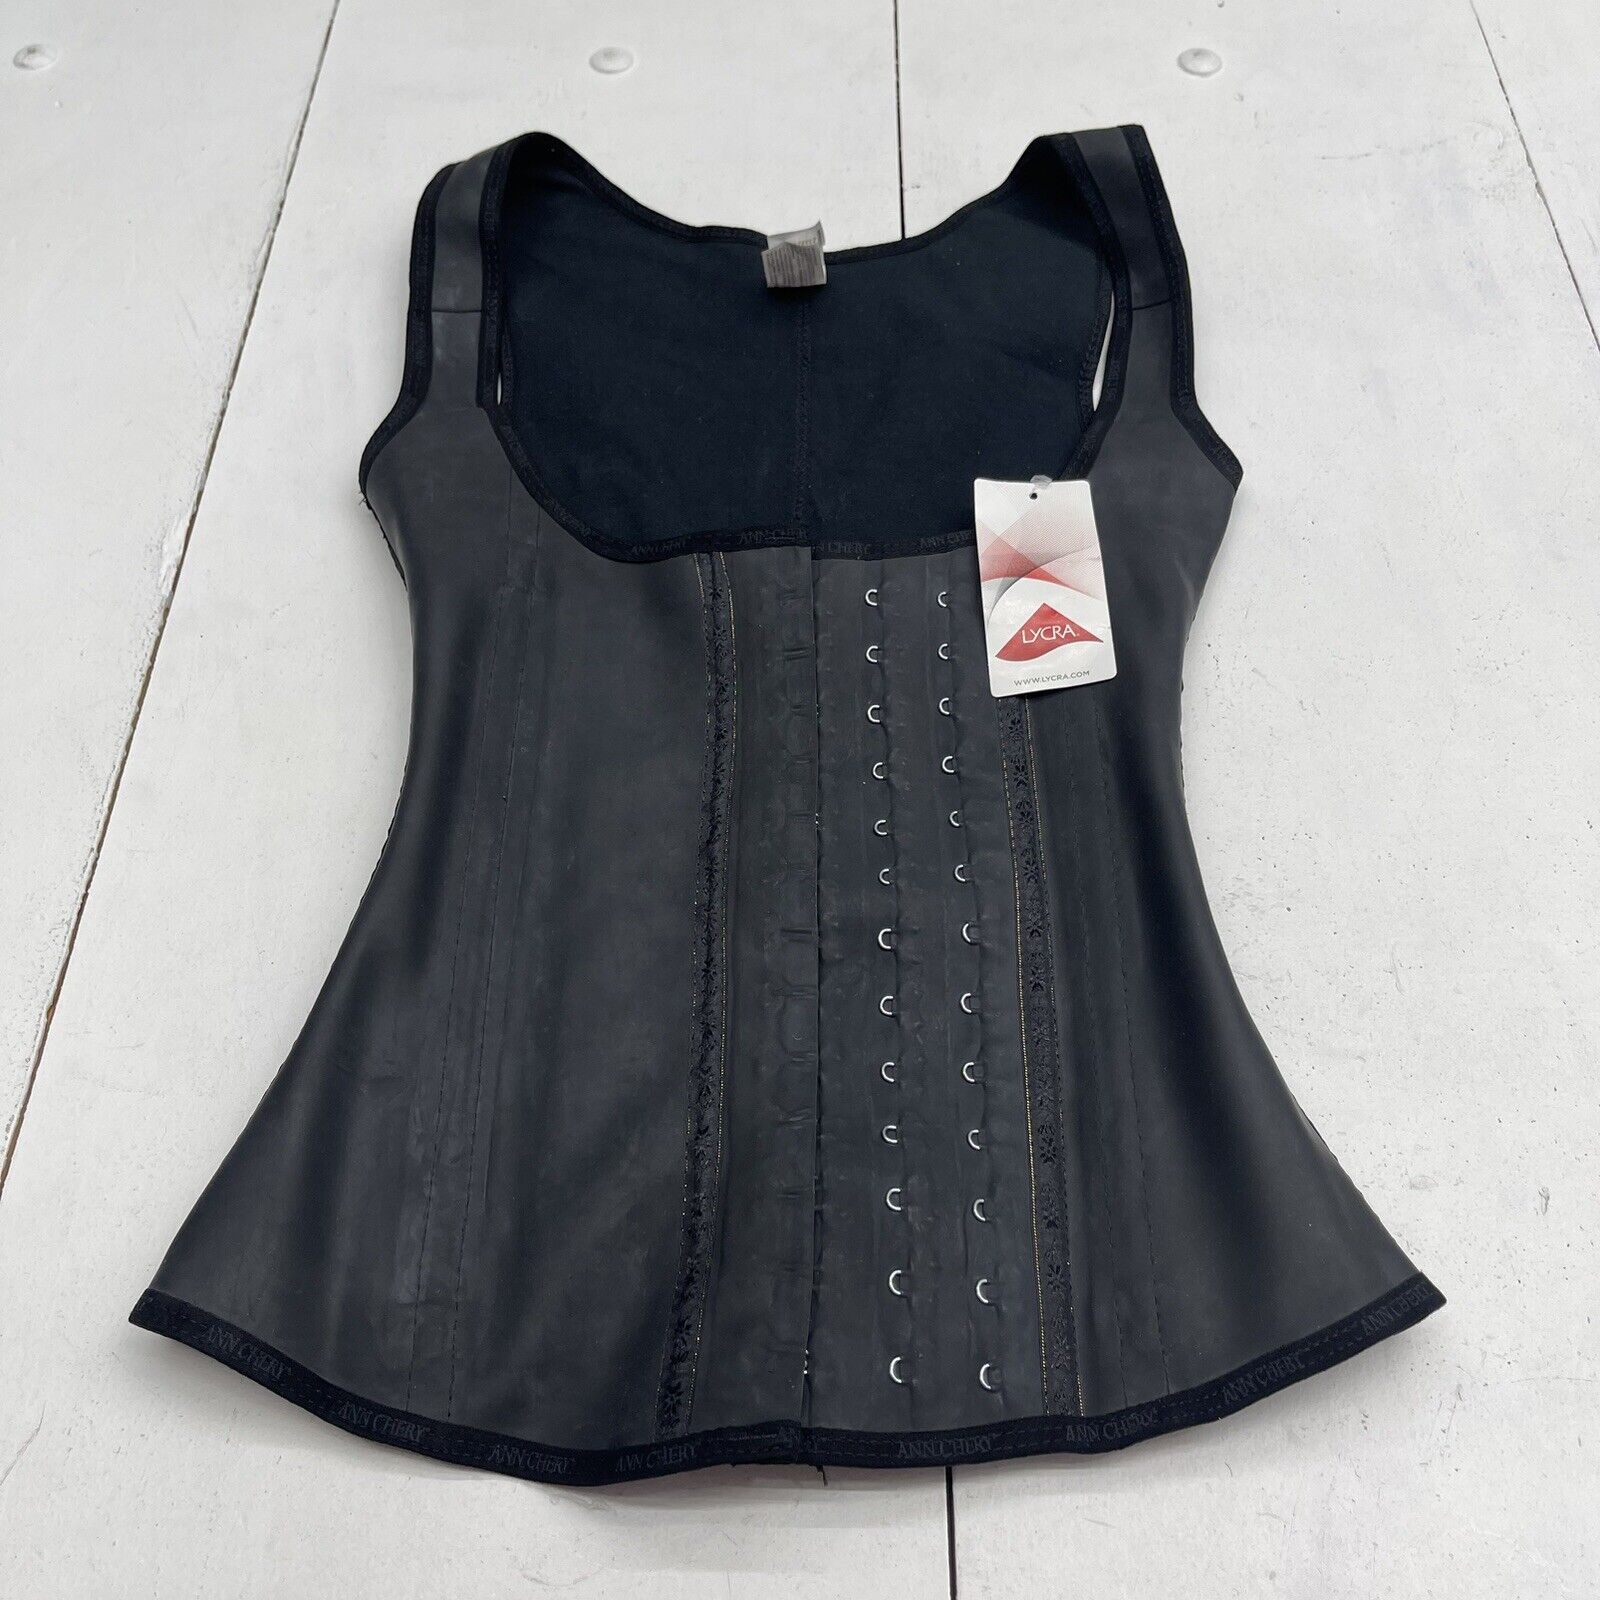 Ann Chery Black 3 Hook Latex Vest Waist Trainer Women's Size 32 New -  beyond exchange